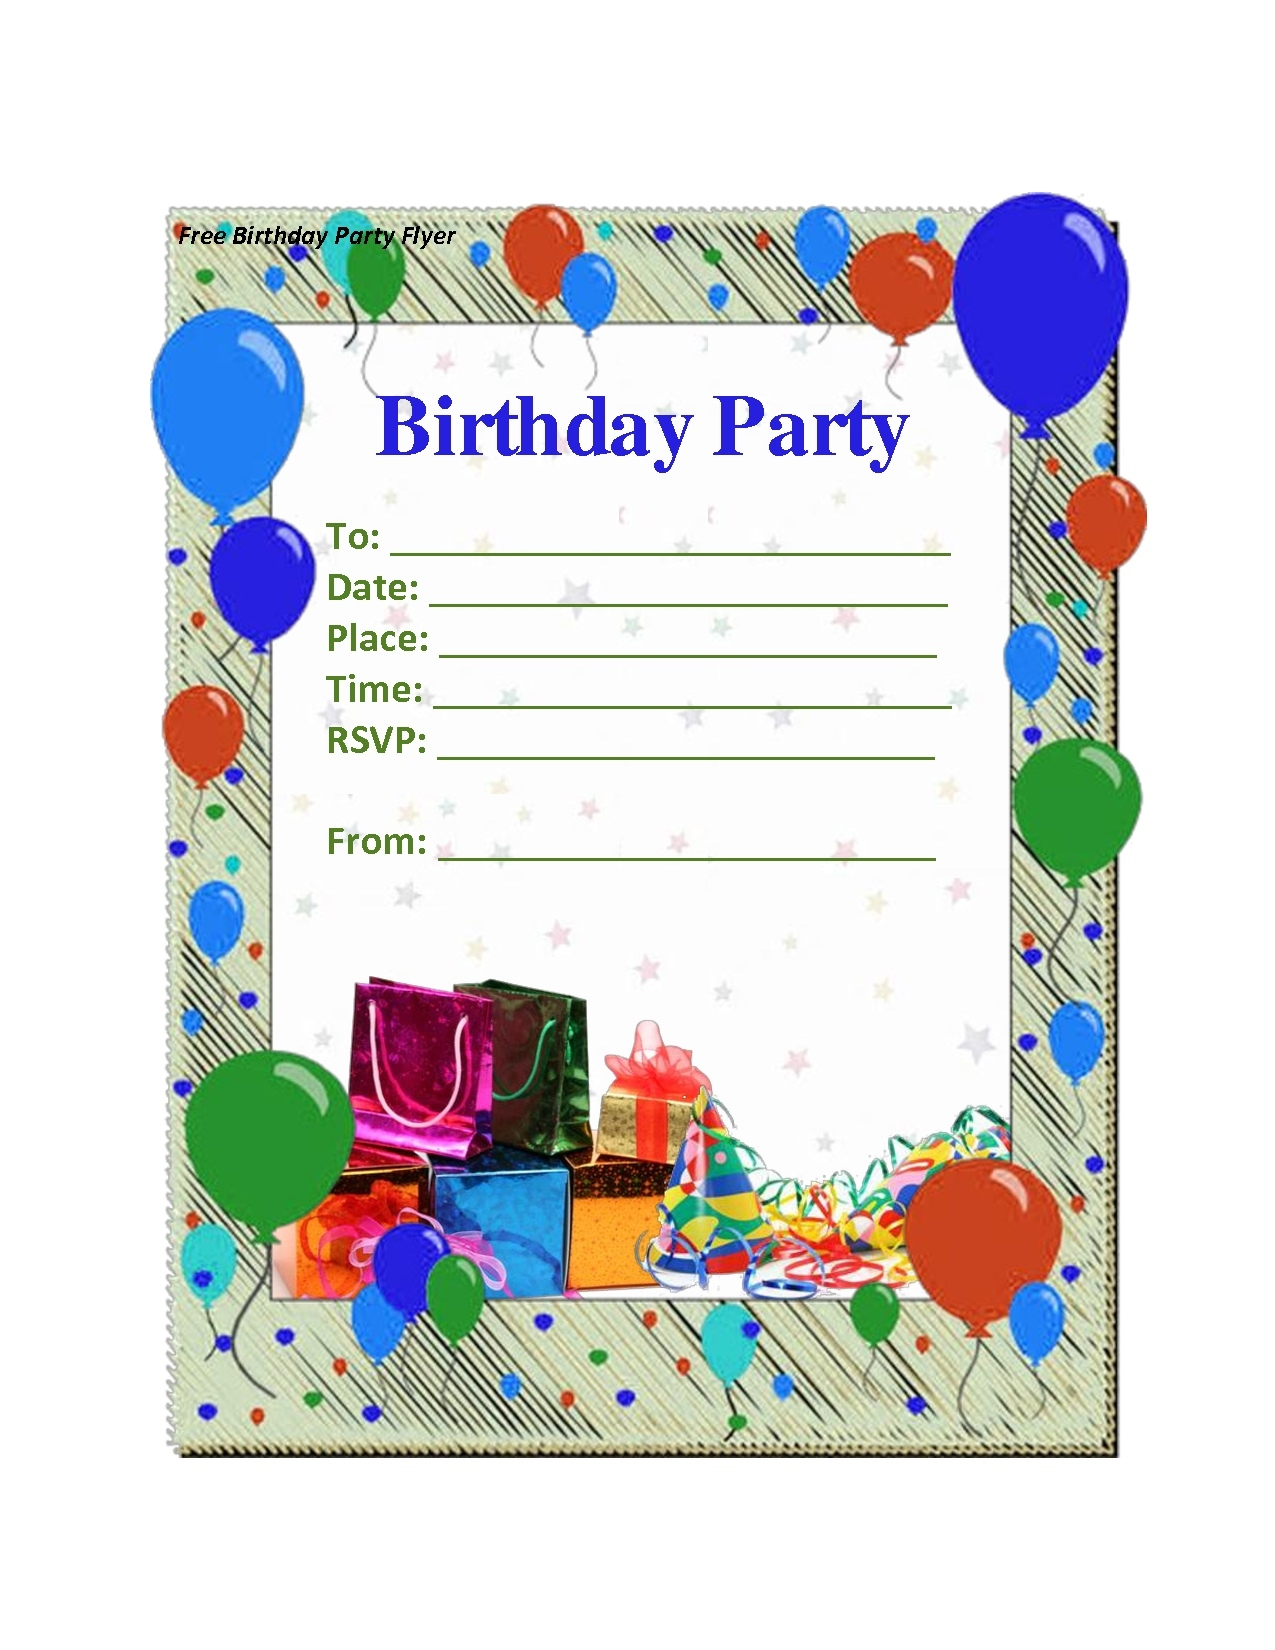 Birthday Card Invitations Templates Birthday Invitation Examples regarding size 1275 X 1650